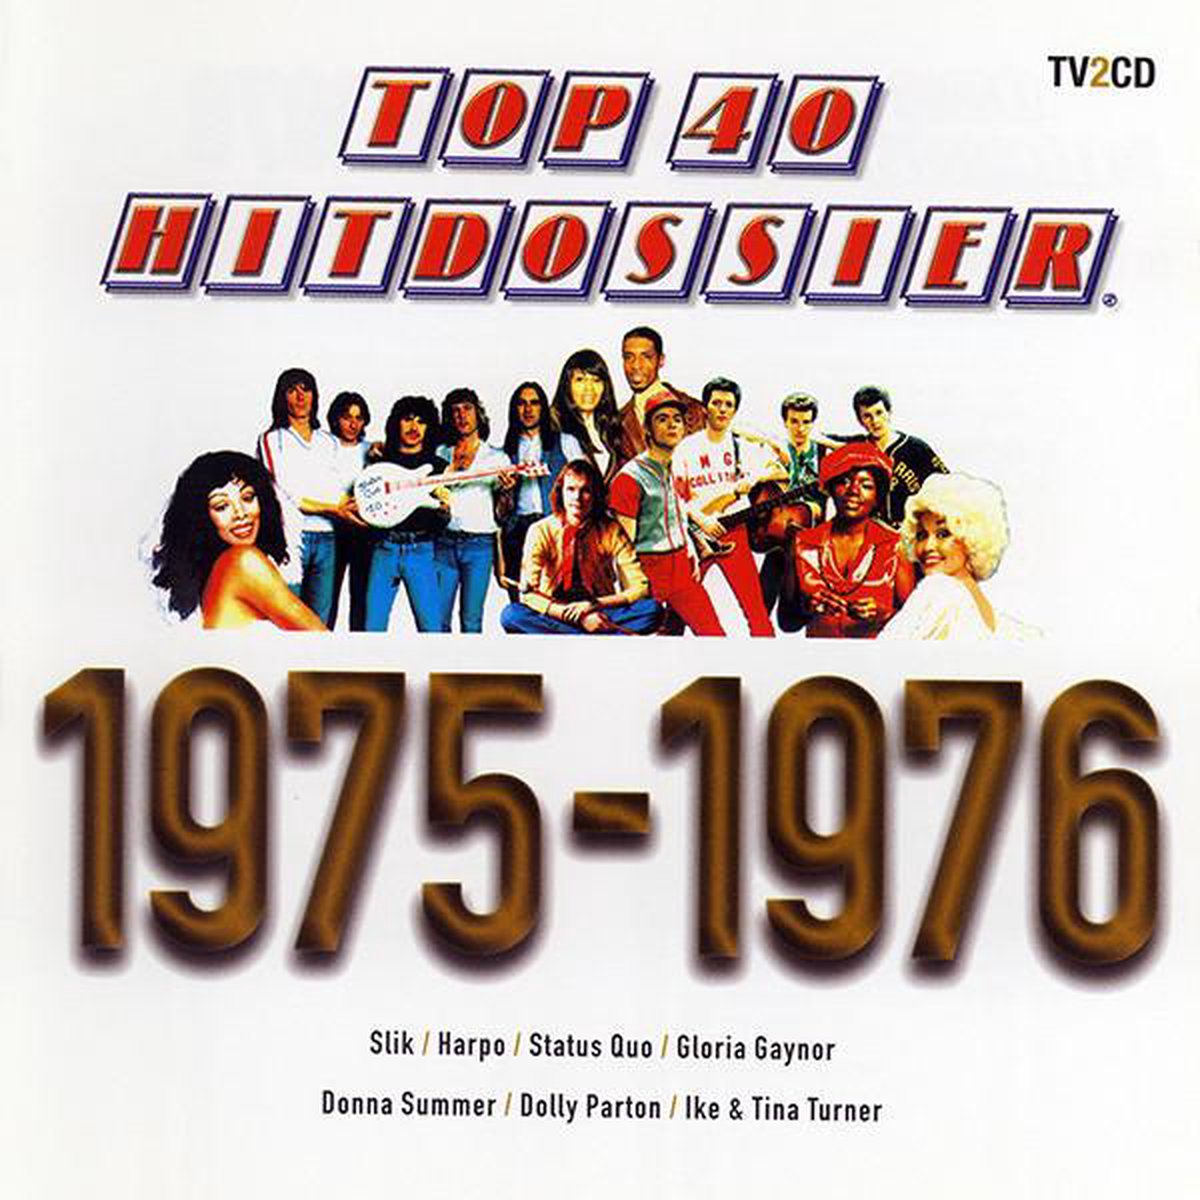 Top 40 Hitdossier '75-'76 - Kc & the Sunshine Band